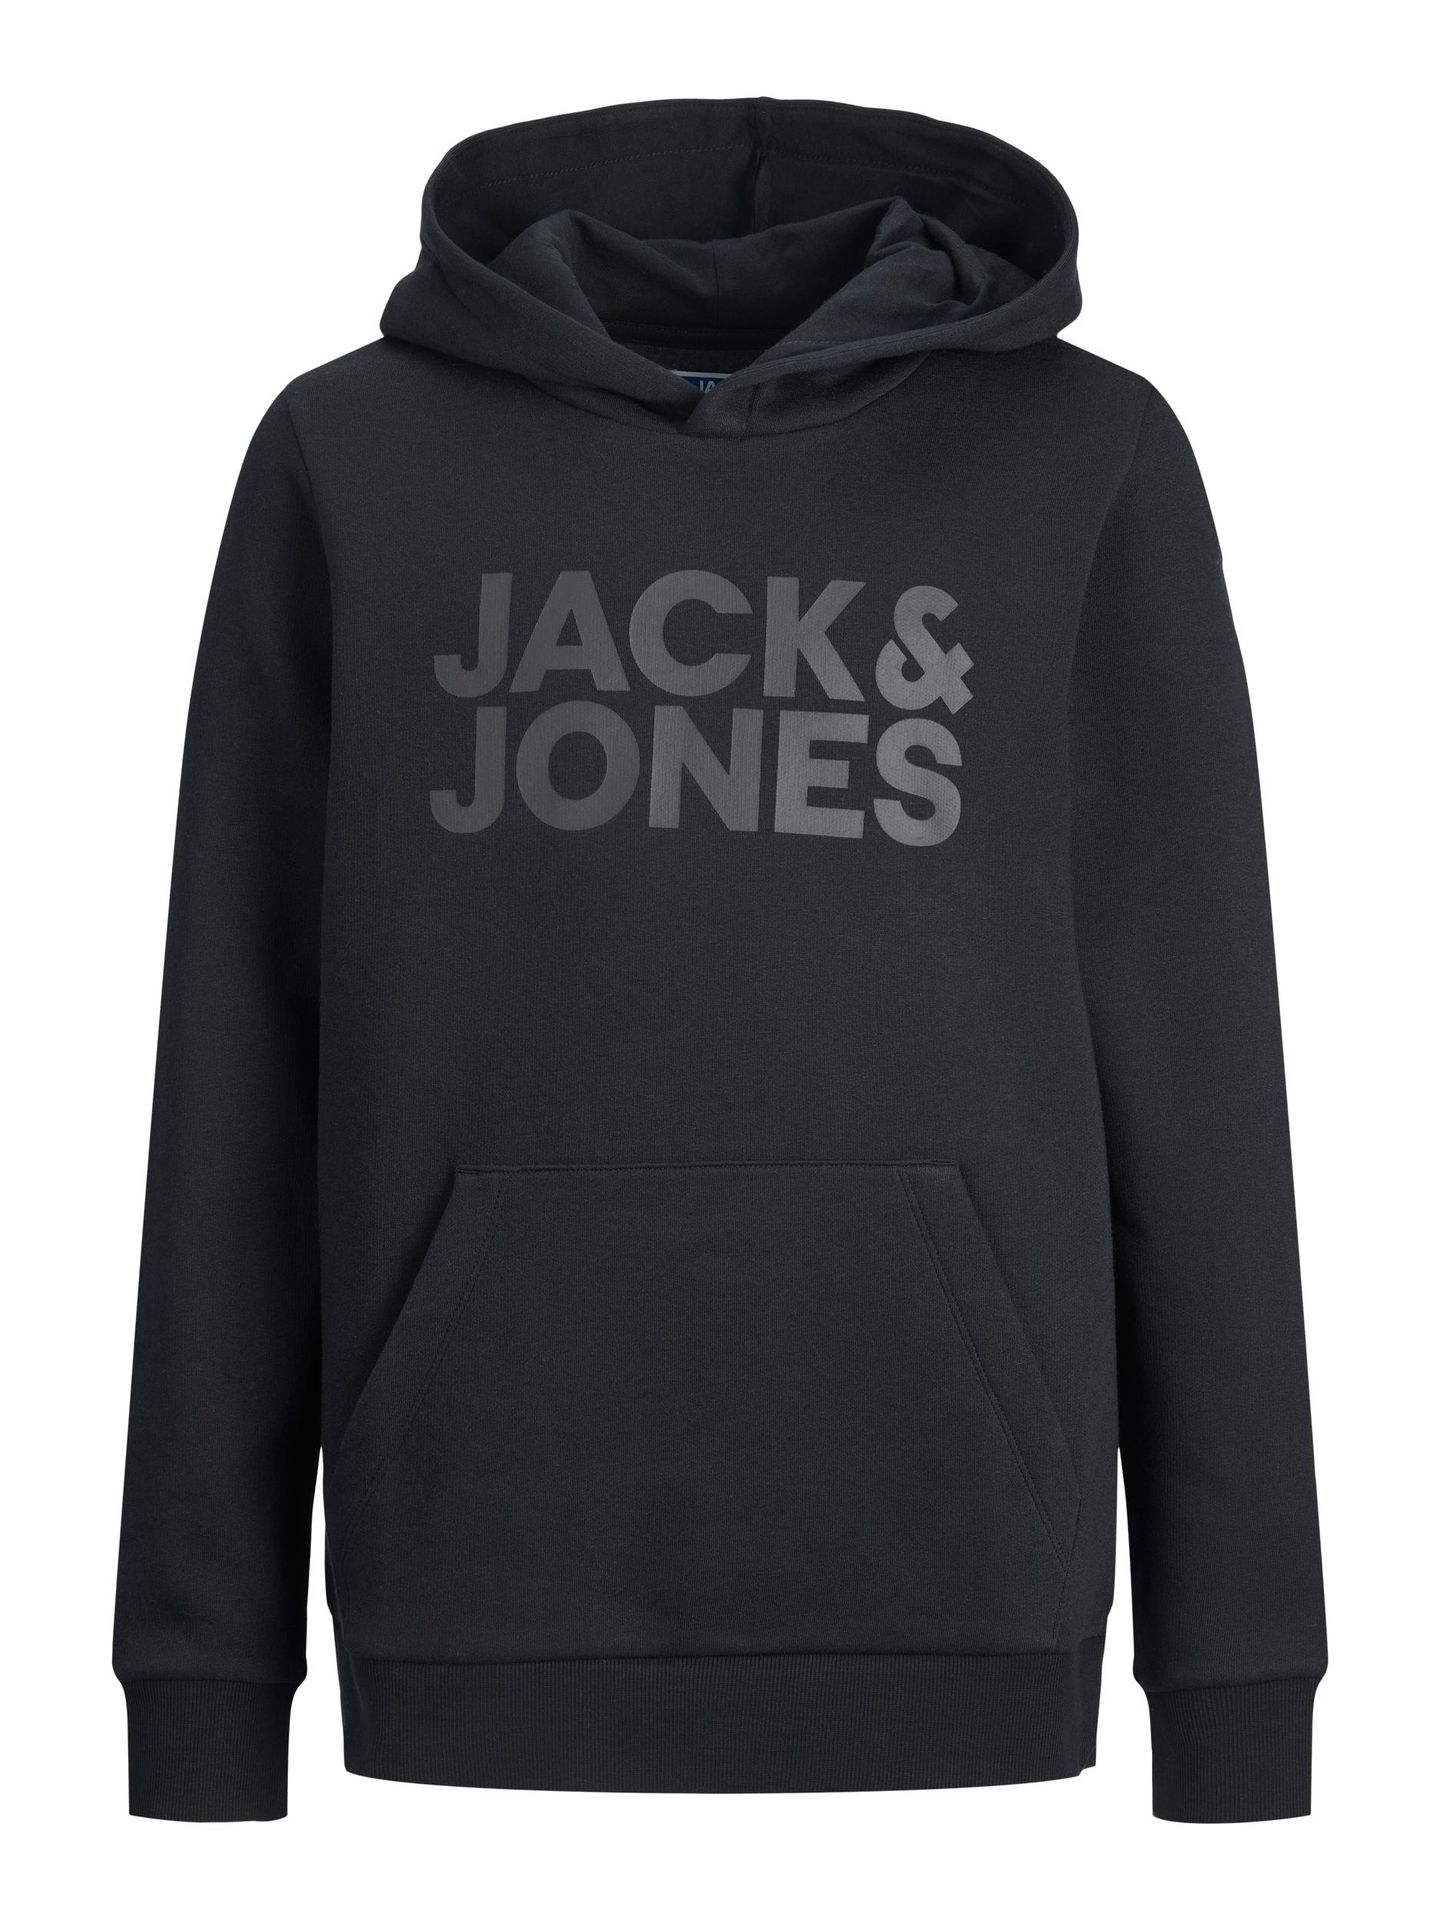 Jack & Jones JJECORP LOGO SWEAT HOOD NOOS JNR Black/JR/lLarge Print/W. Black 00104722-EKA26011400001866